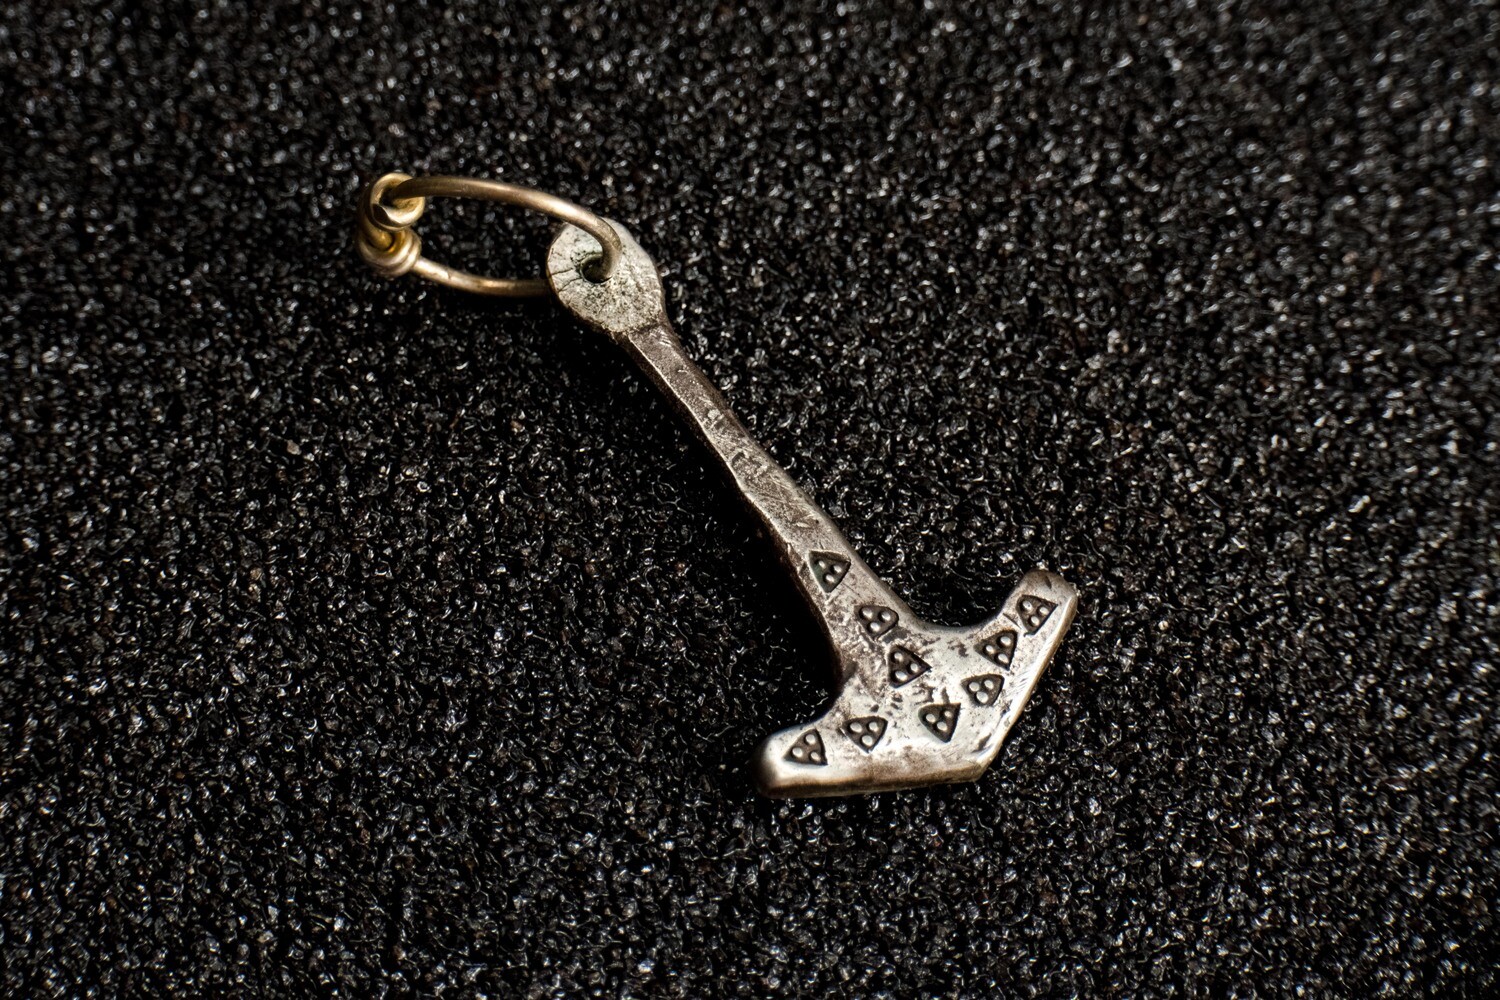 Mjolnir, Mjöllnir/Thor Hammer Necklace, Viking Warrior Pagan Amulet, Silver